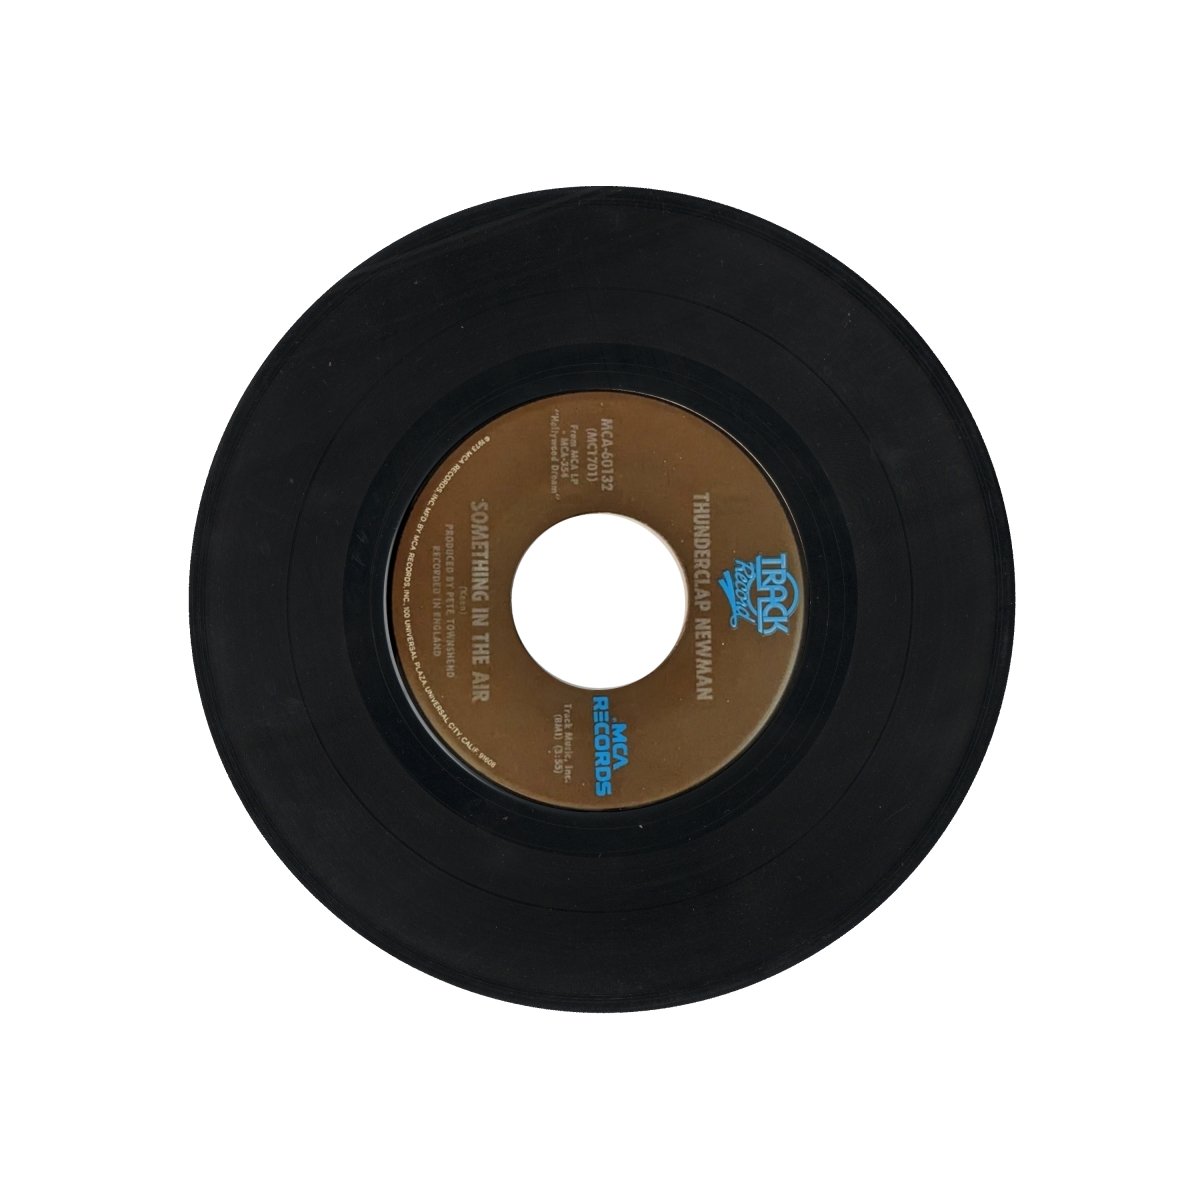 Thunderclap Newman - Something In The Air 7" Vinyl